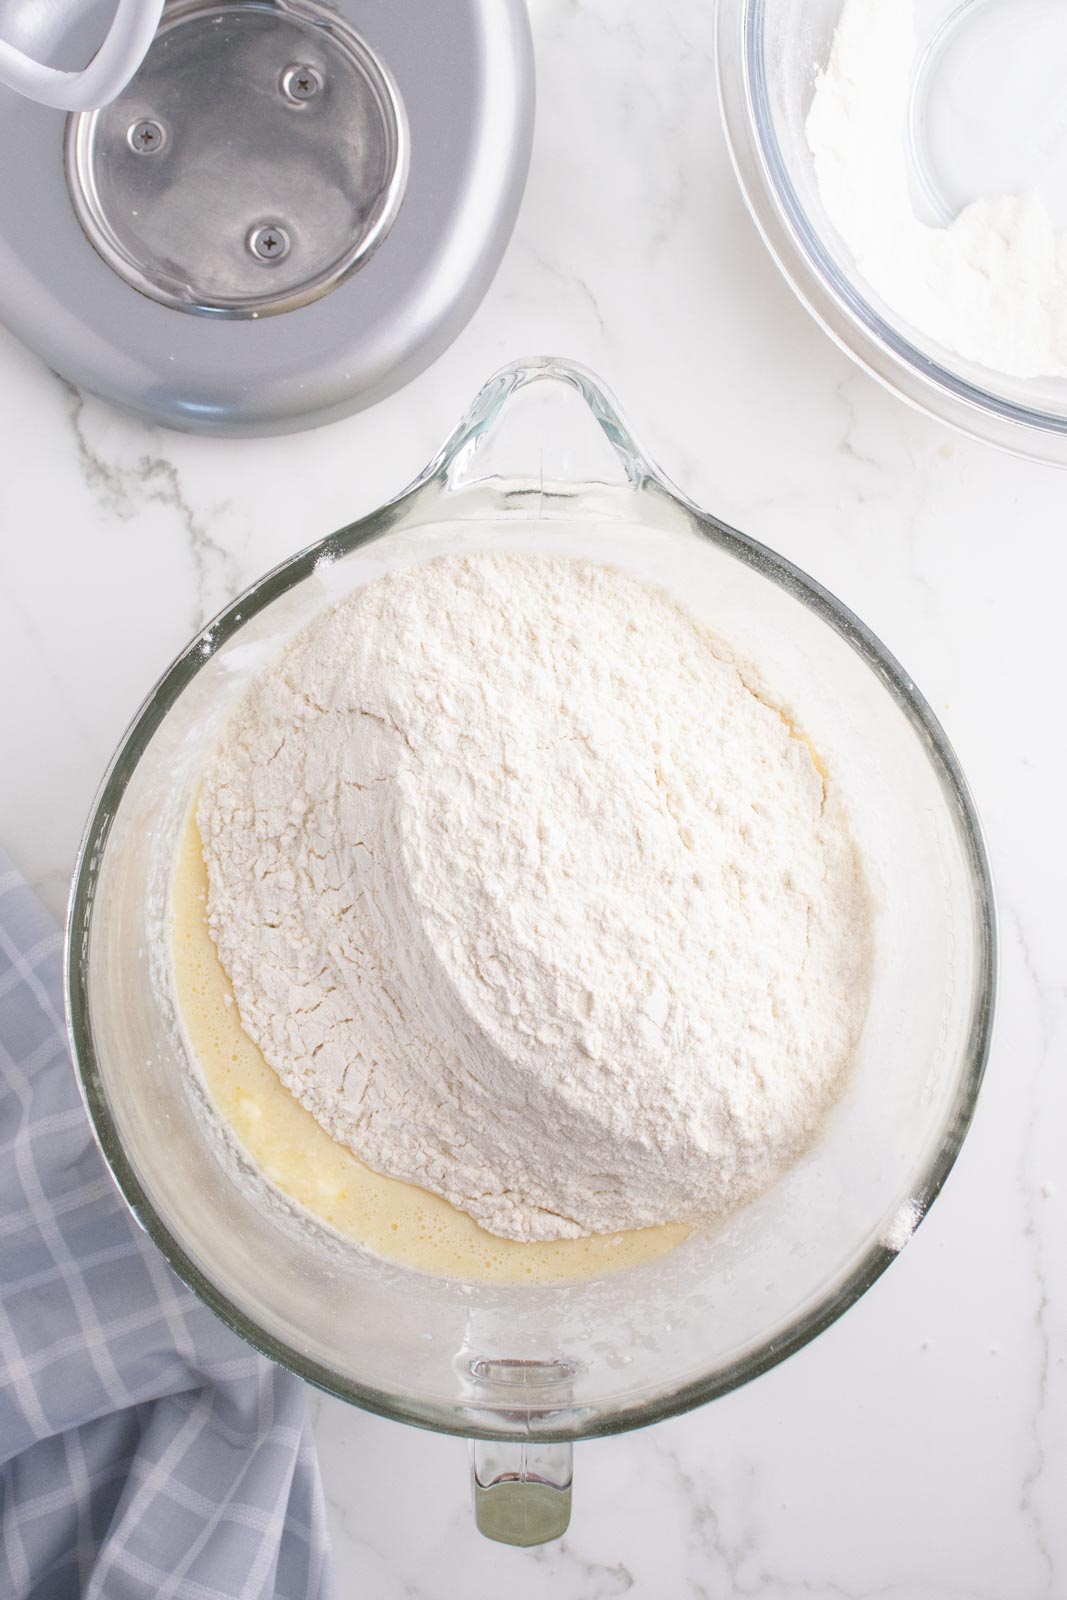 Adding dry ingredients to mashed potato bread dough.